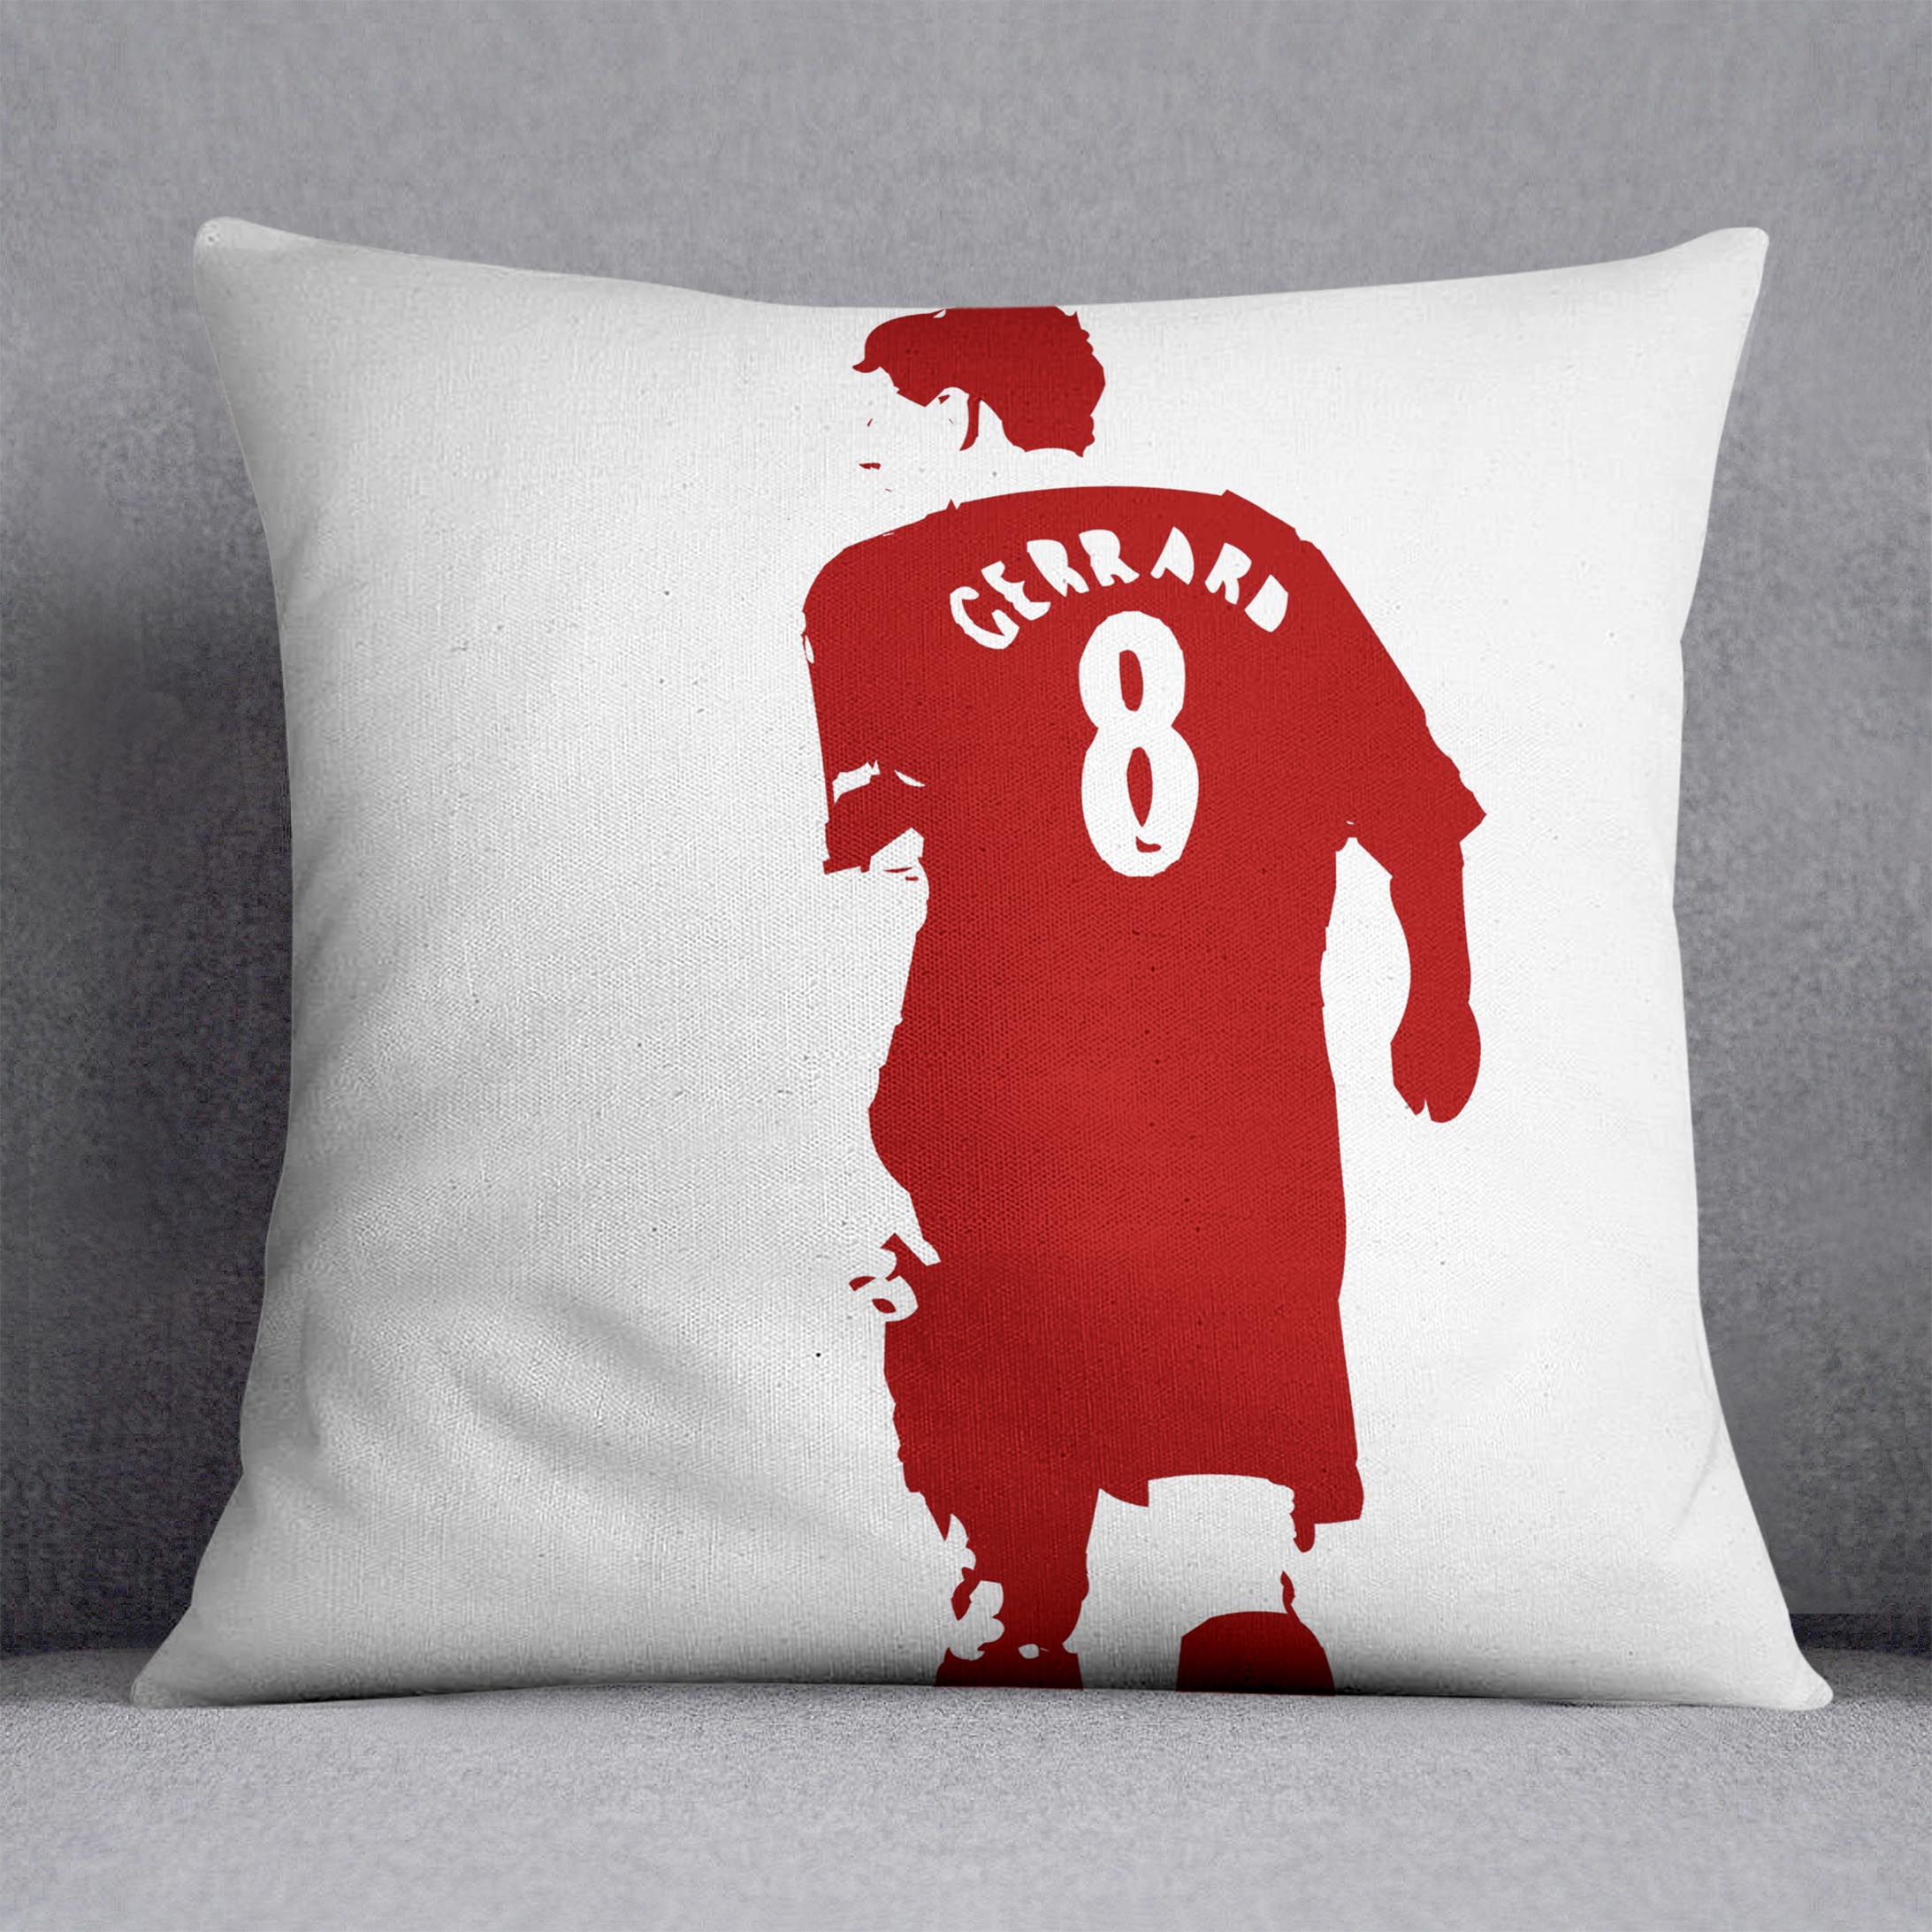 Gerrard Pop Art Cushion